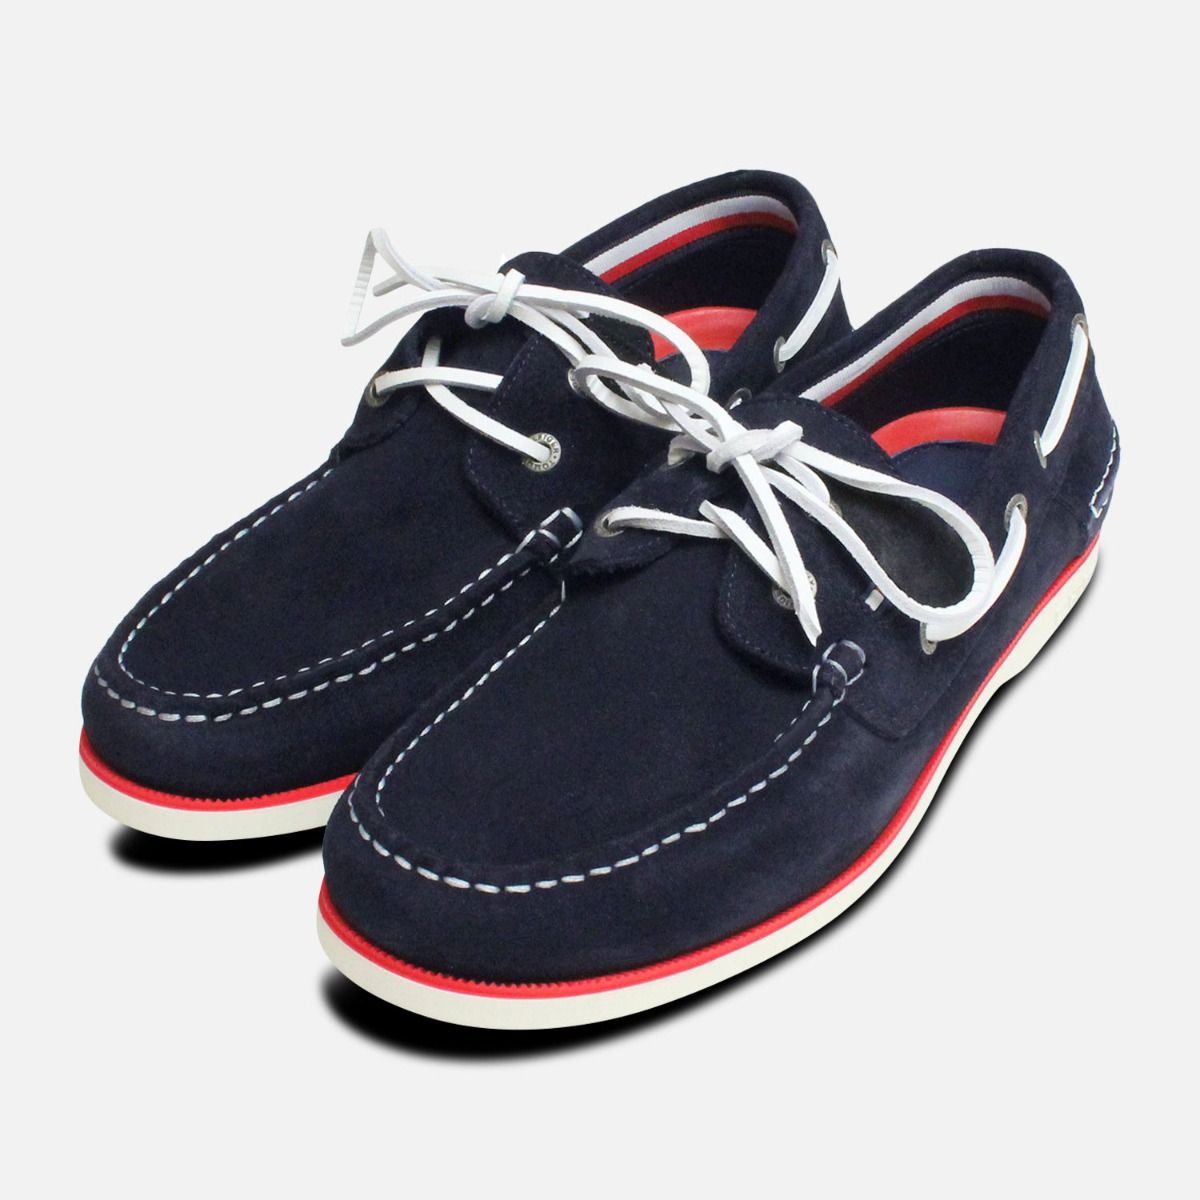 tommy hilfiger navy blue loafers